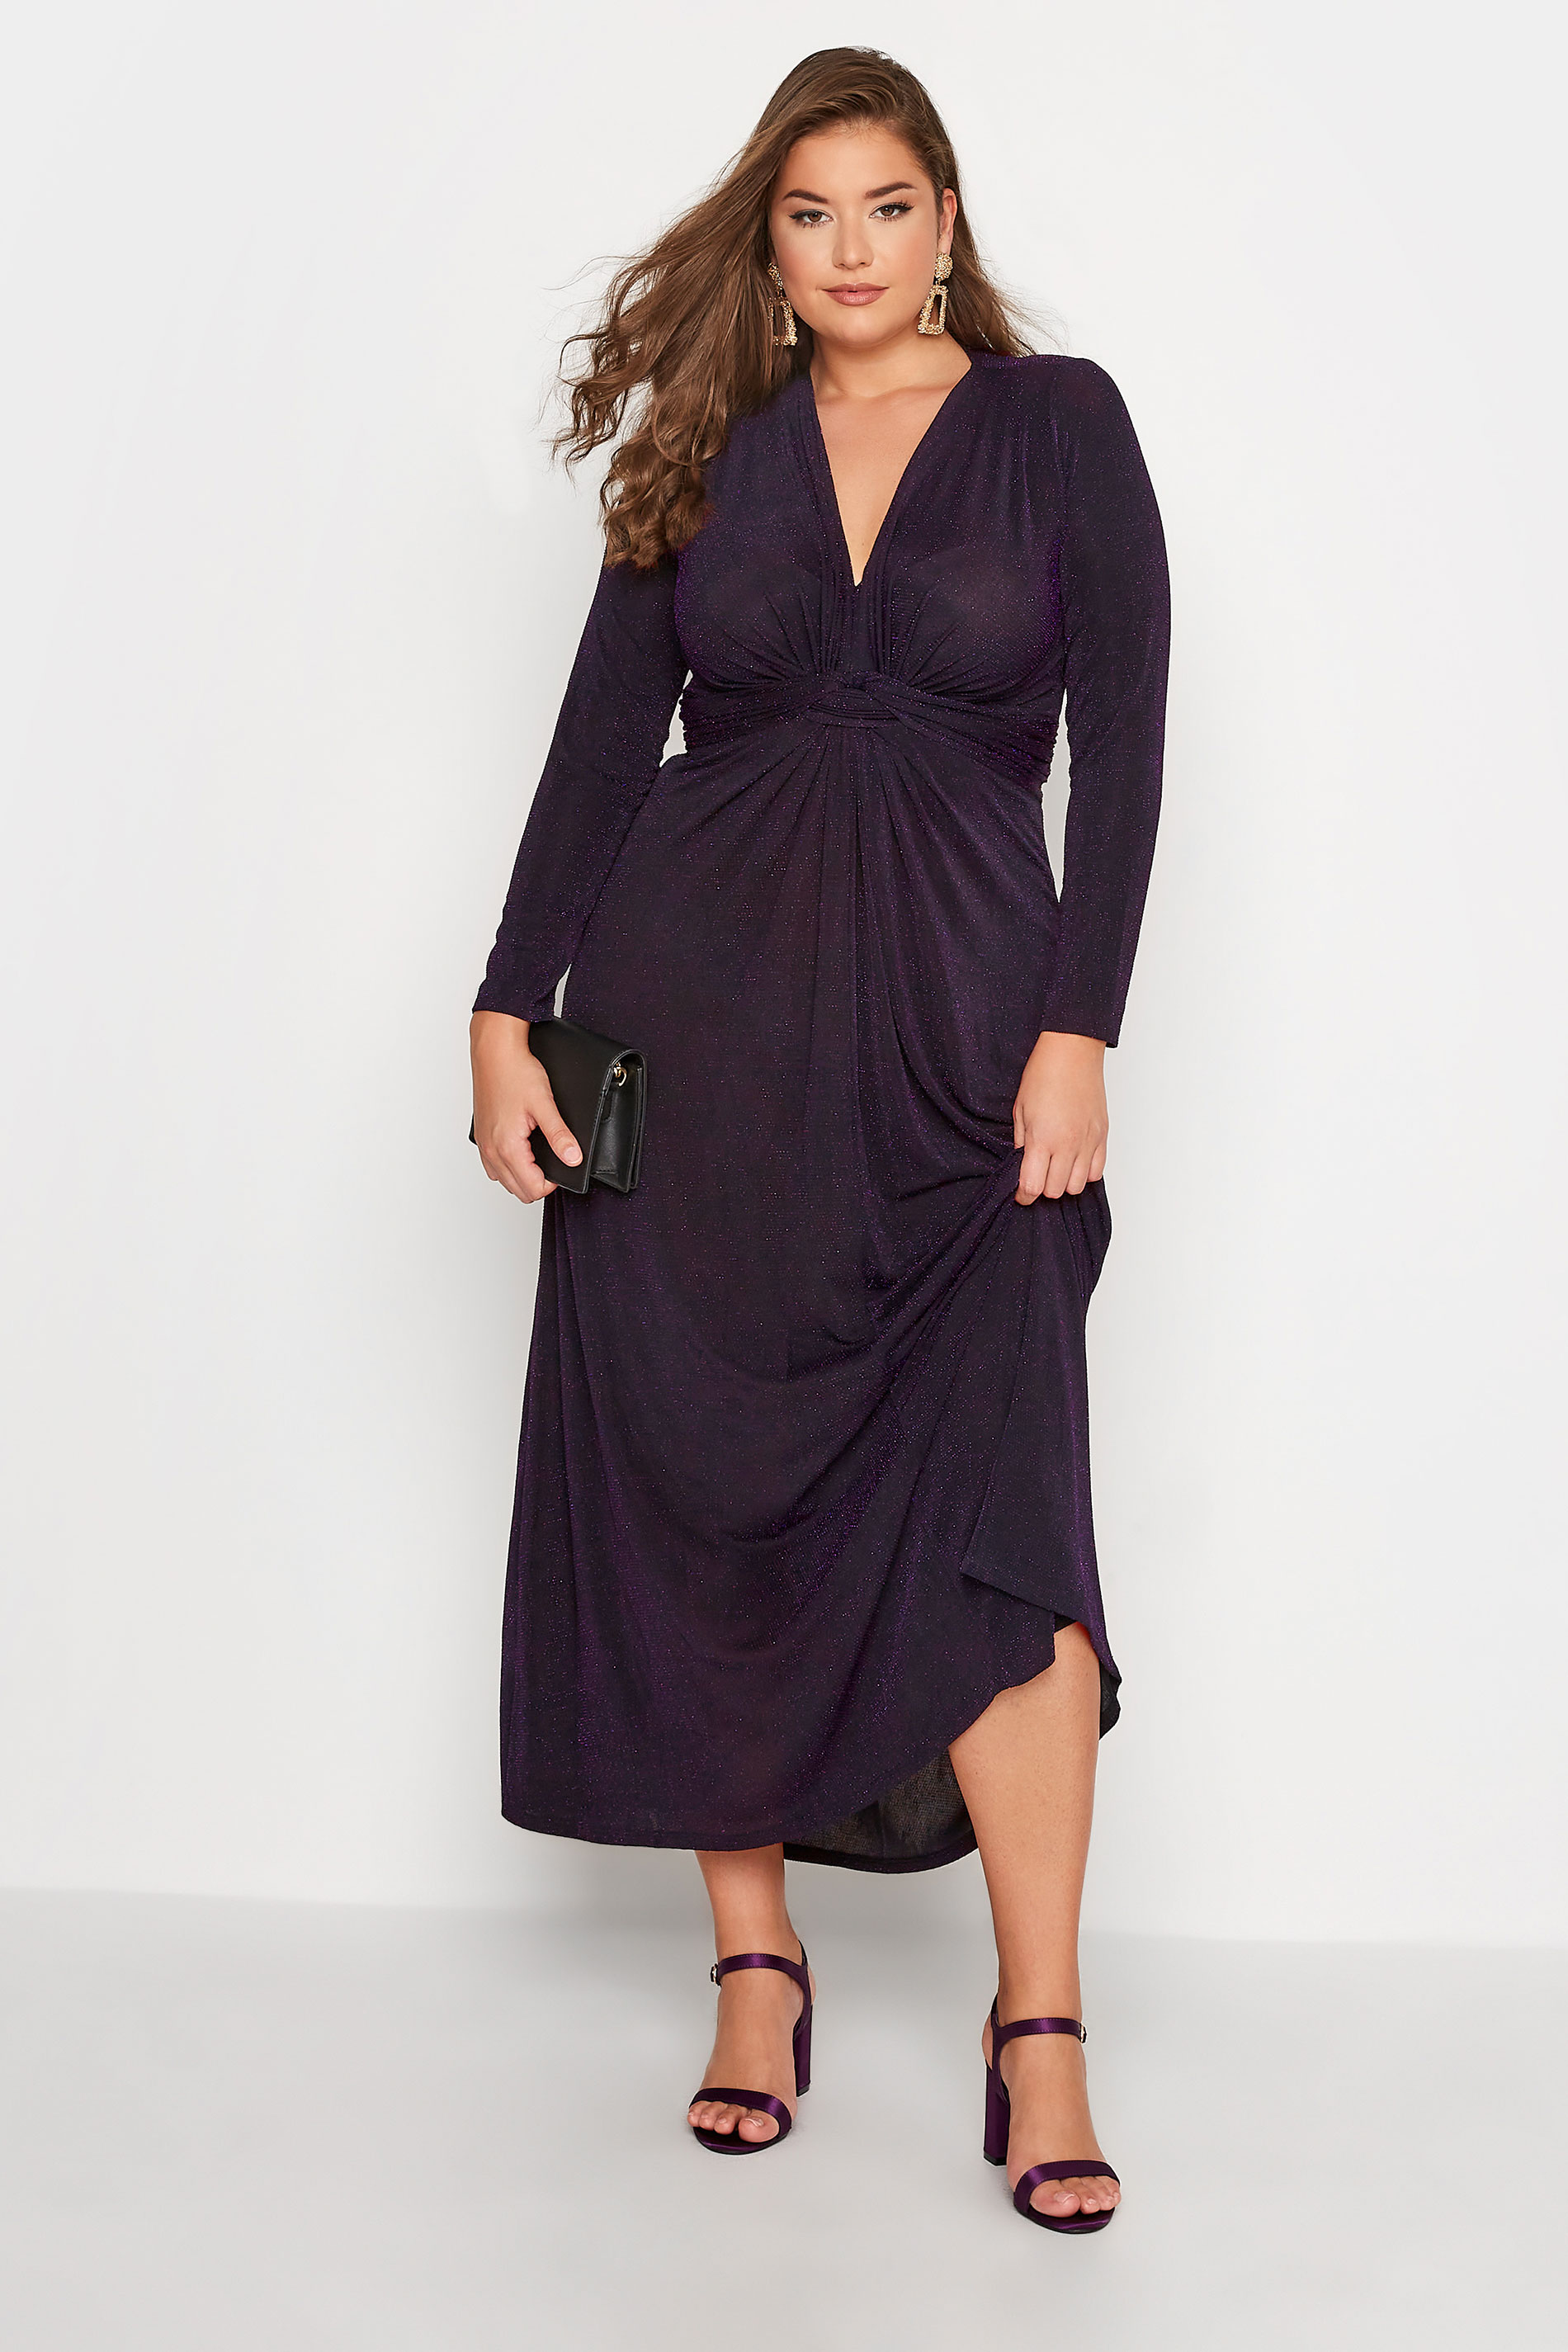 YOURS LONDON Plus Size Black & Purple Glitter Maxi Dress | Yours Clothing 1